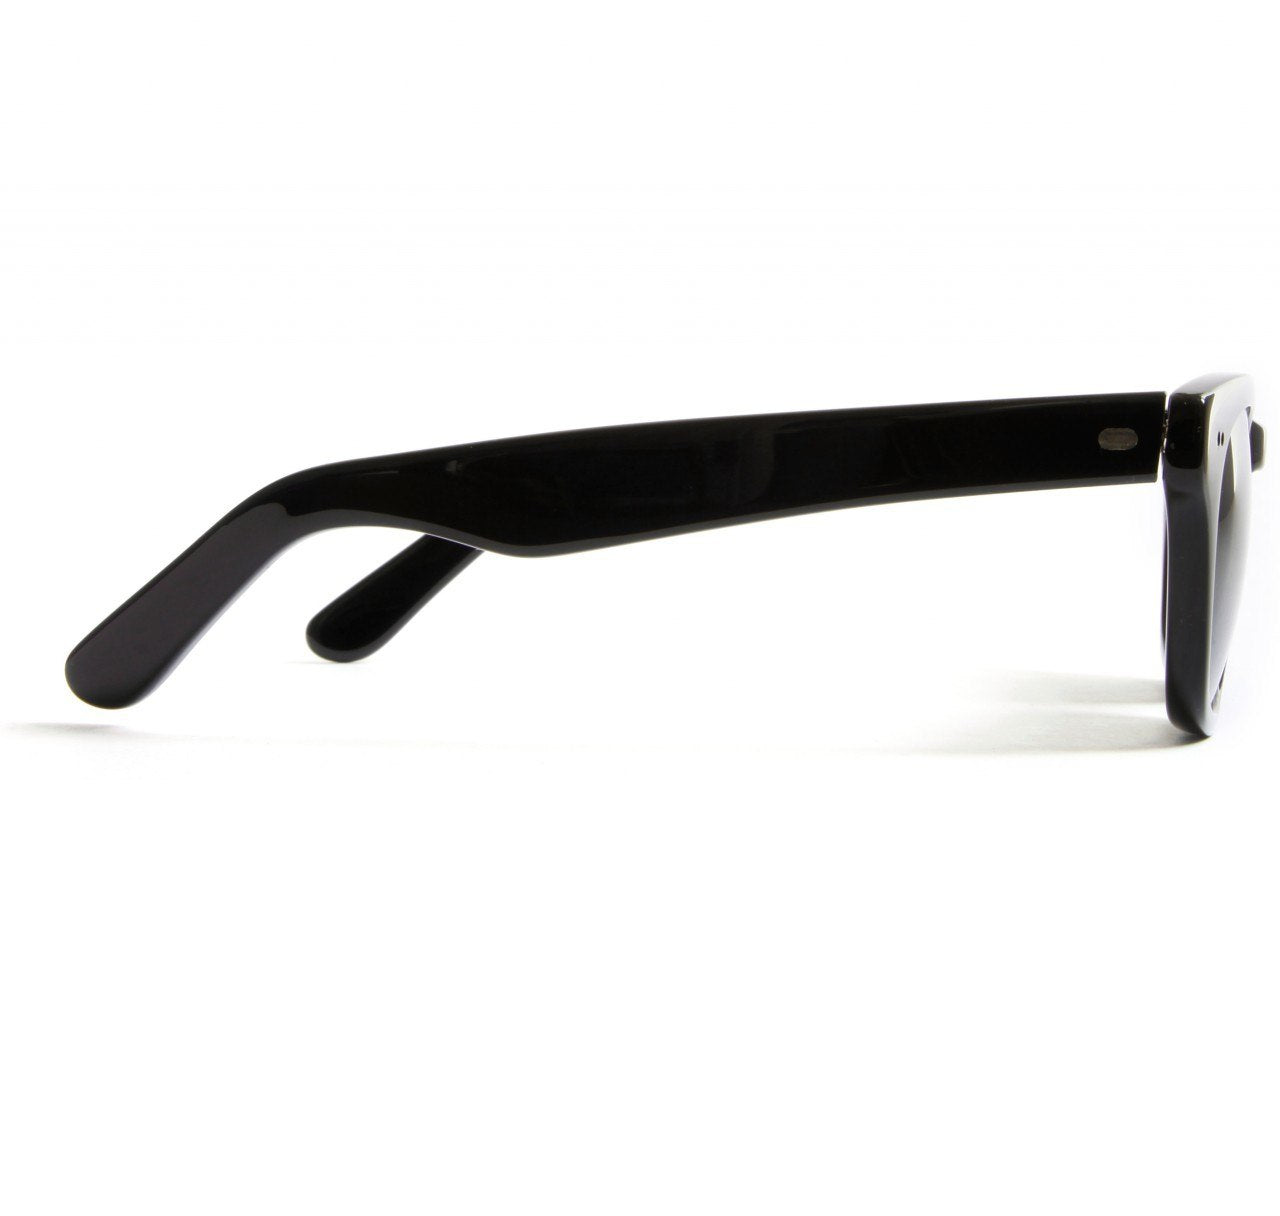 Shuron Sidewinder Black Sunglasses